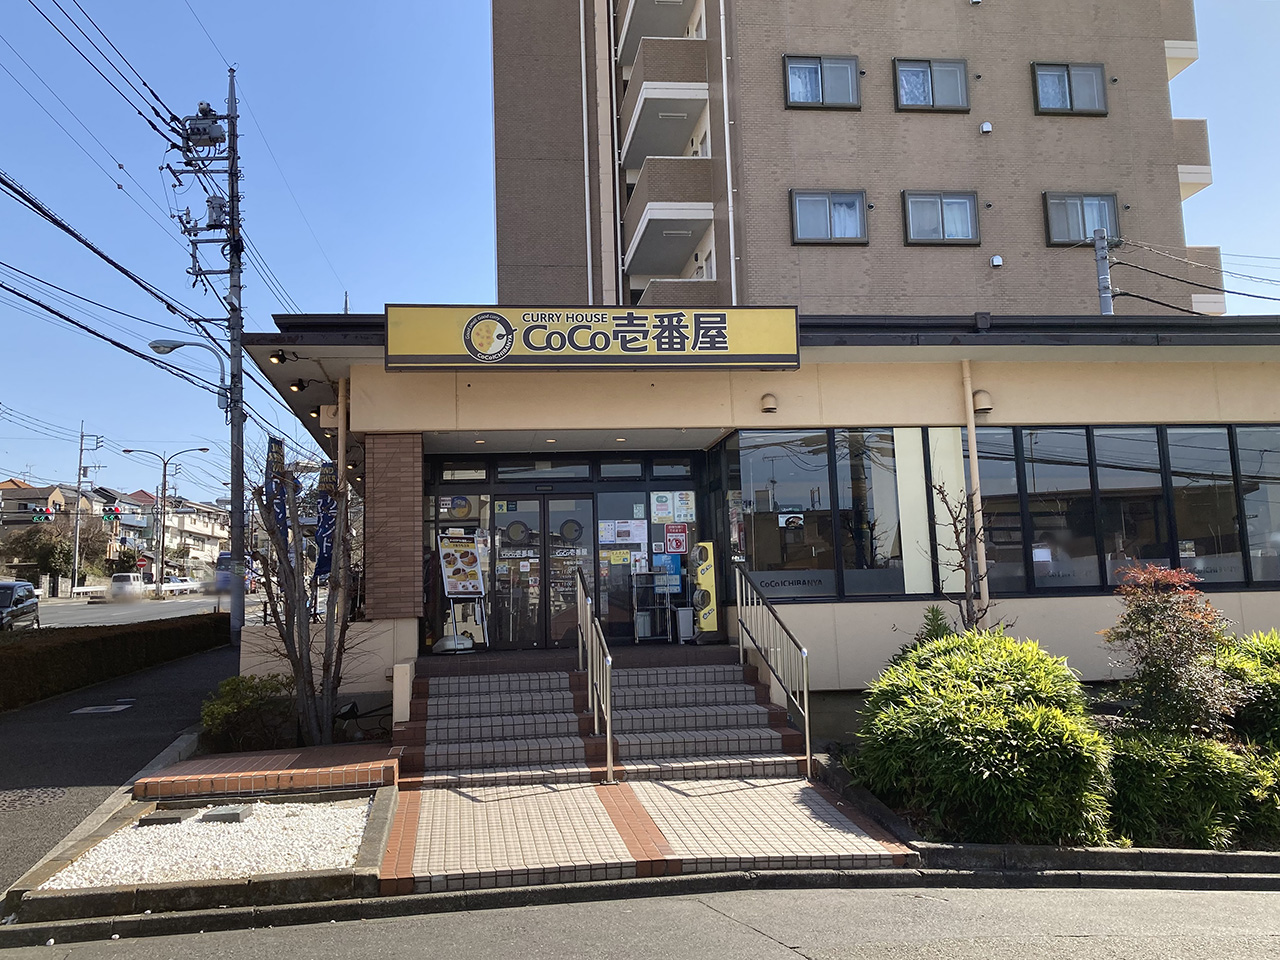 CoCo壱番屋多摩桜ケ丘店が2月14日に閉店するそうです